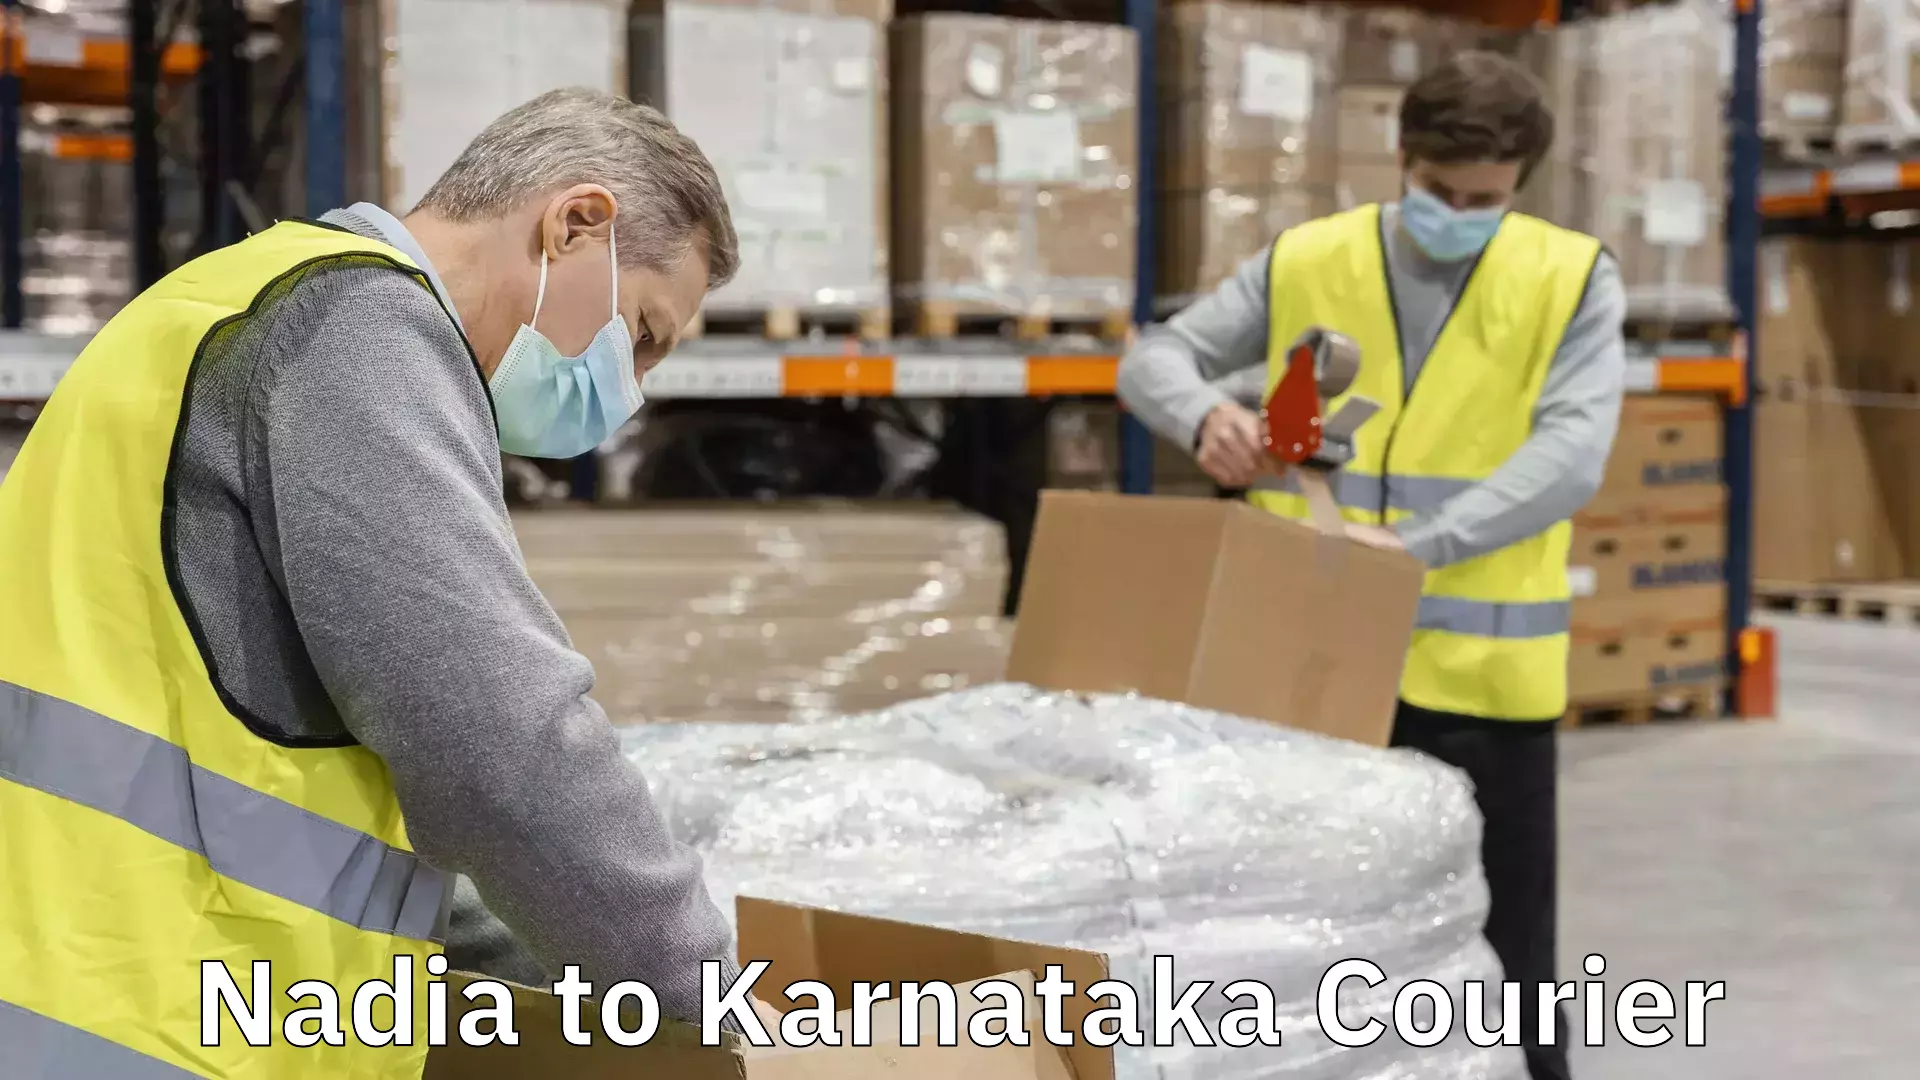 Affordable parcel service Nadia to Karnataka